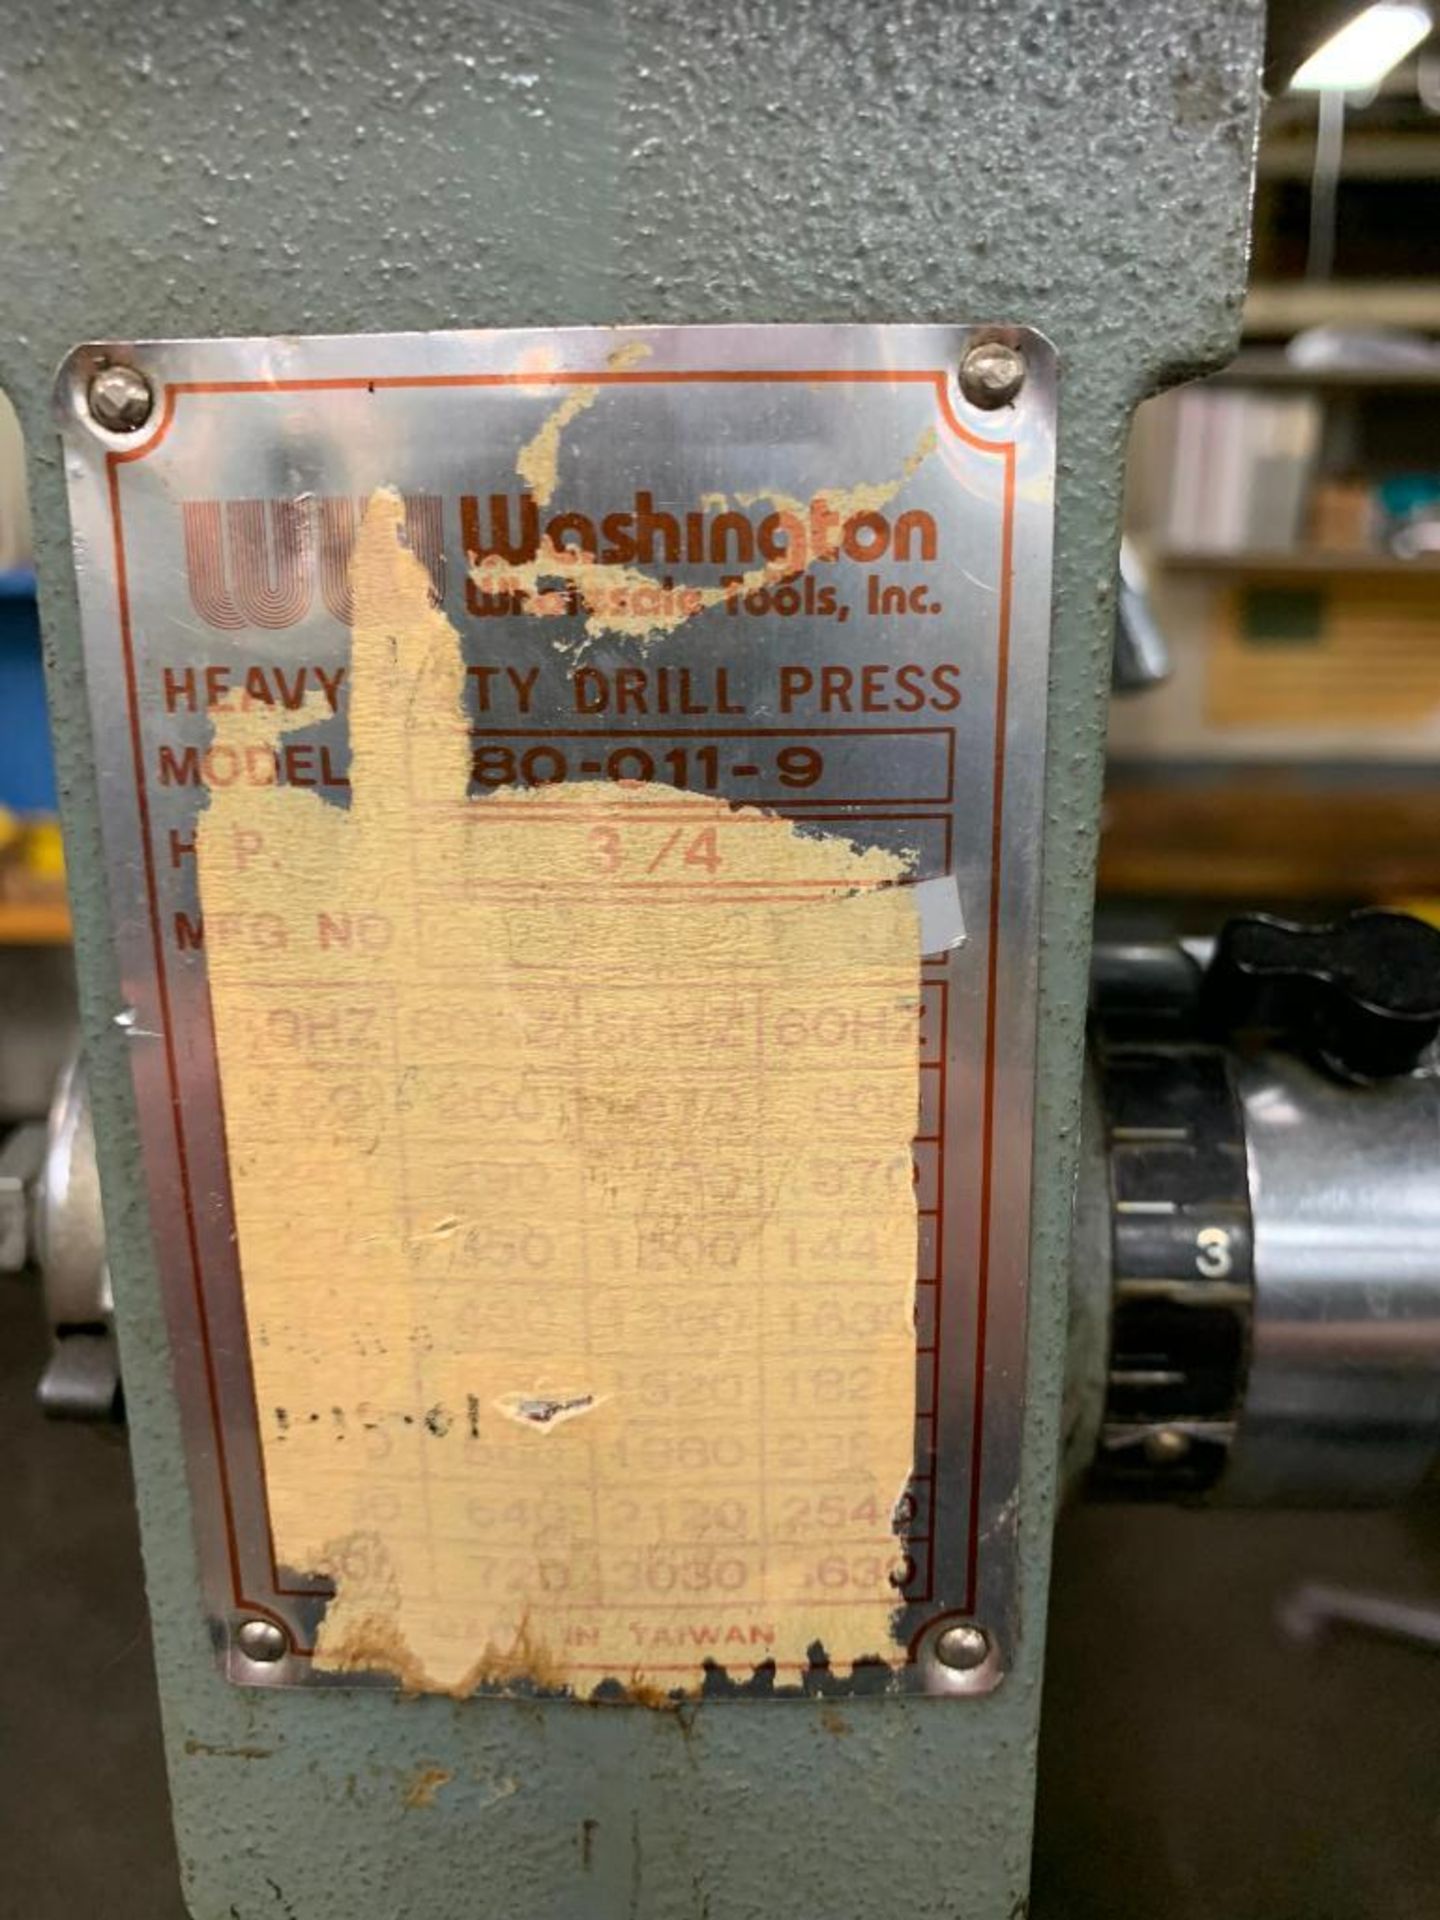 Washington Pedestal Drill Press, Model 80-011-9, 3/4-HP, 120 V - Image 3 of 3